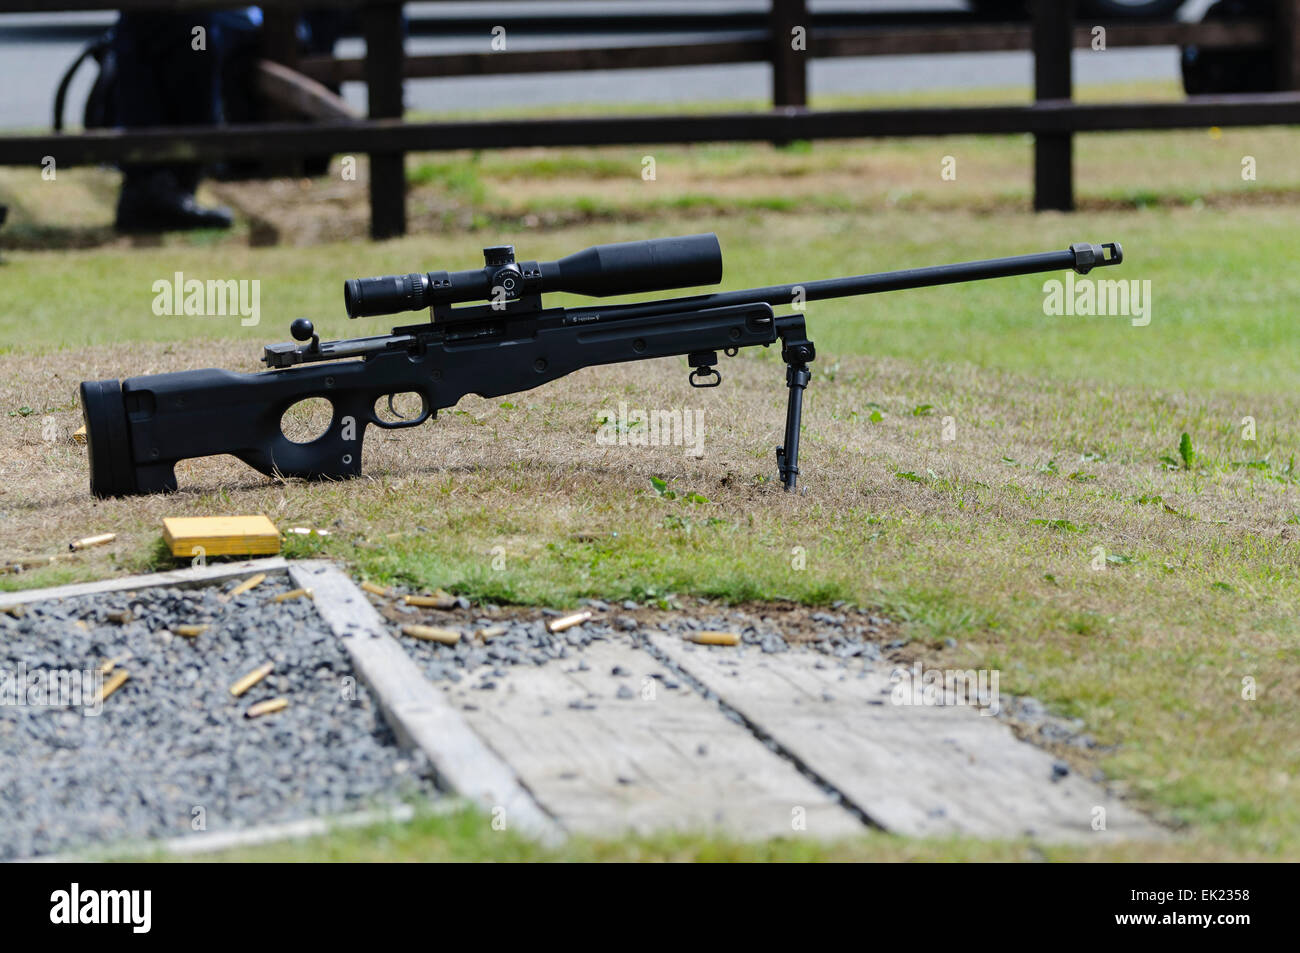 remington rifle sights